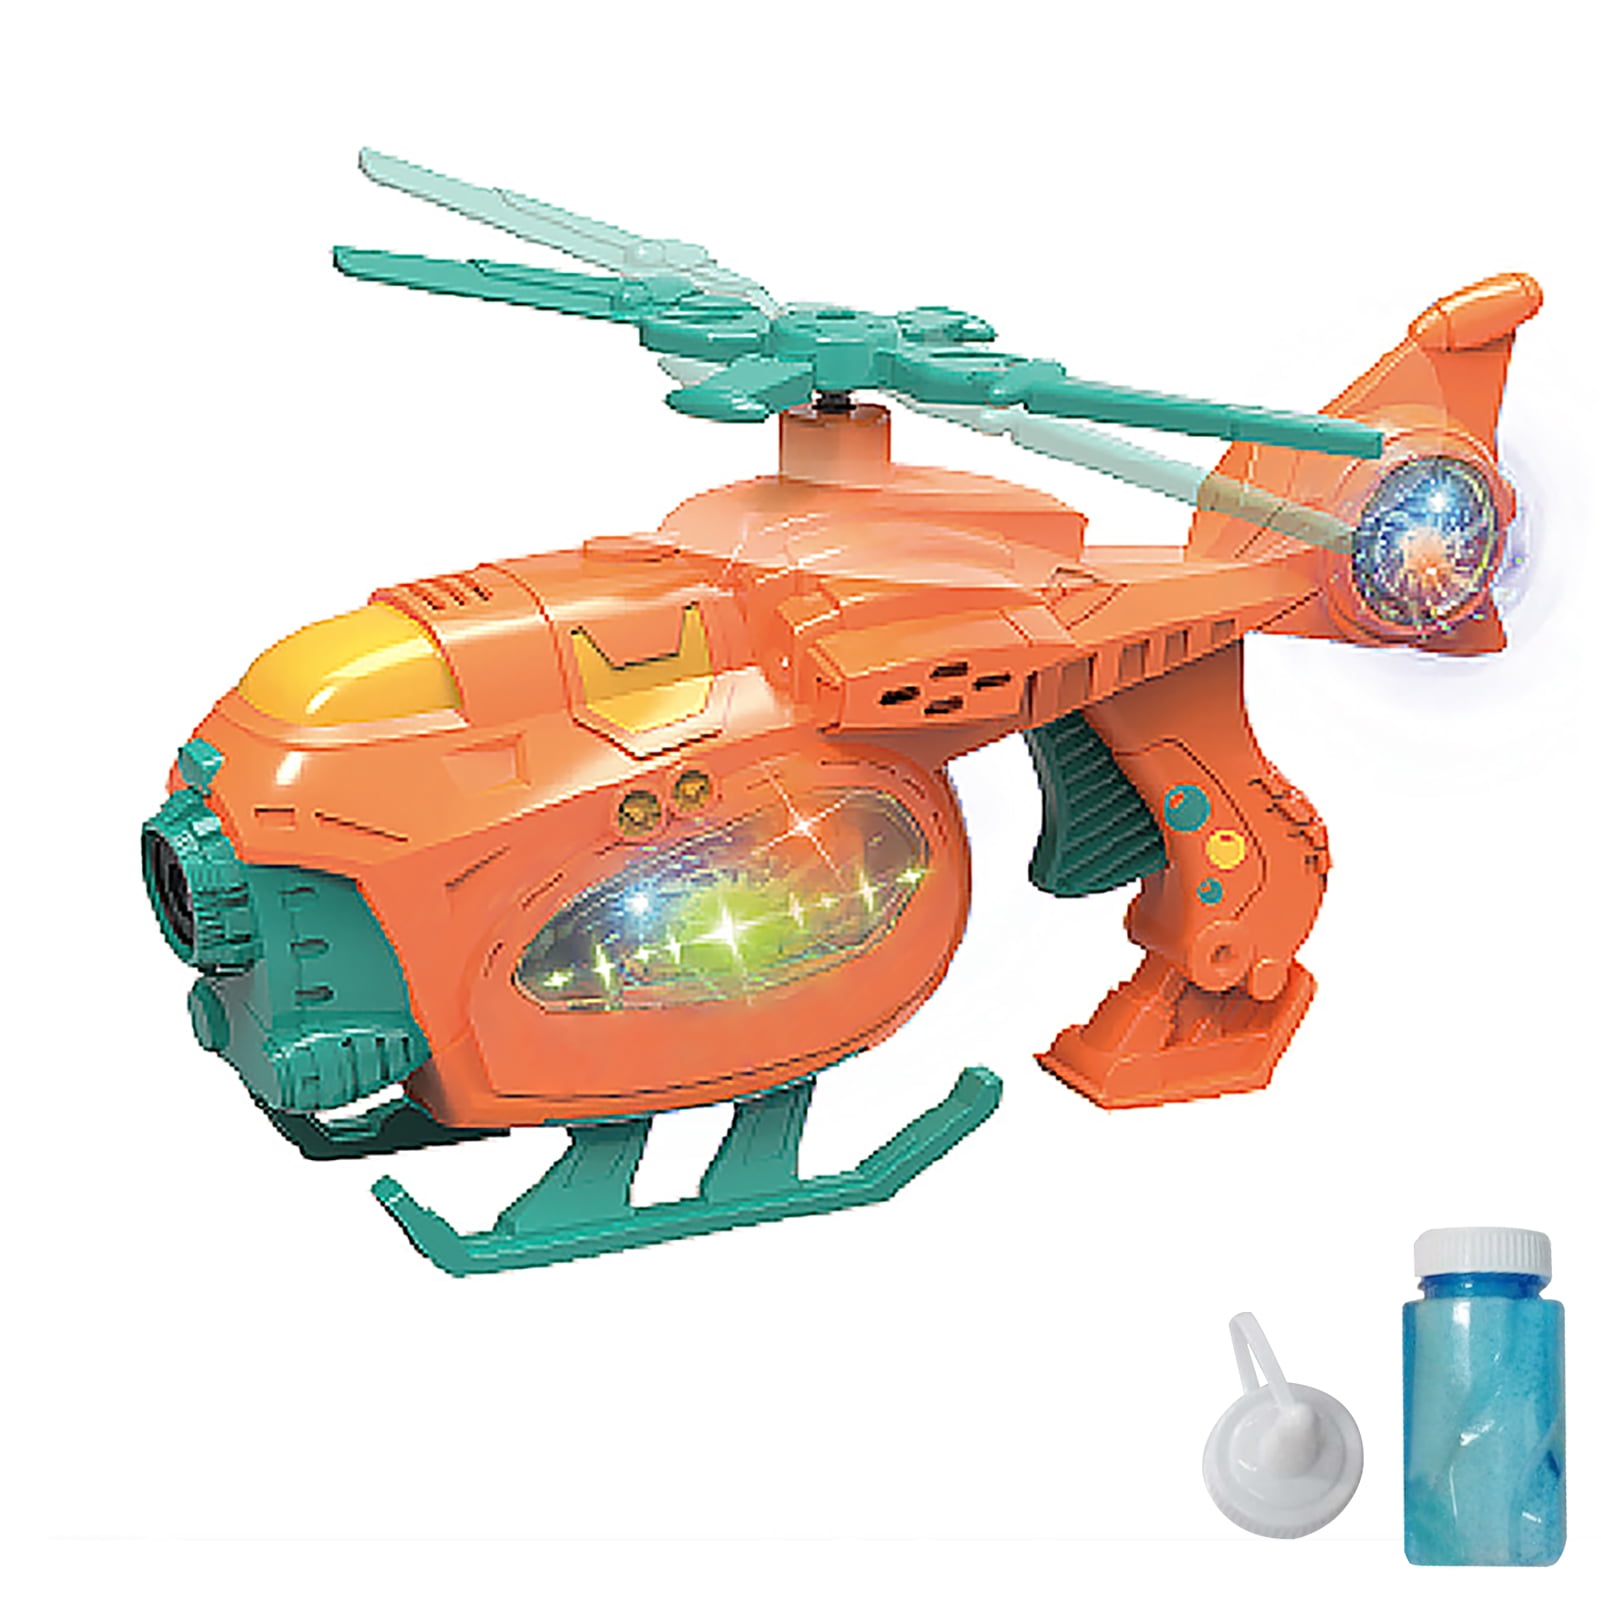 Details about   Bubble Ray Gun Fun Light Up Flashing LED Bubble Machine Kids Outdoor Garden Toy 